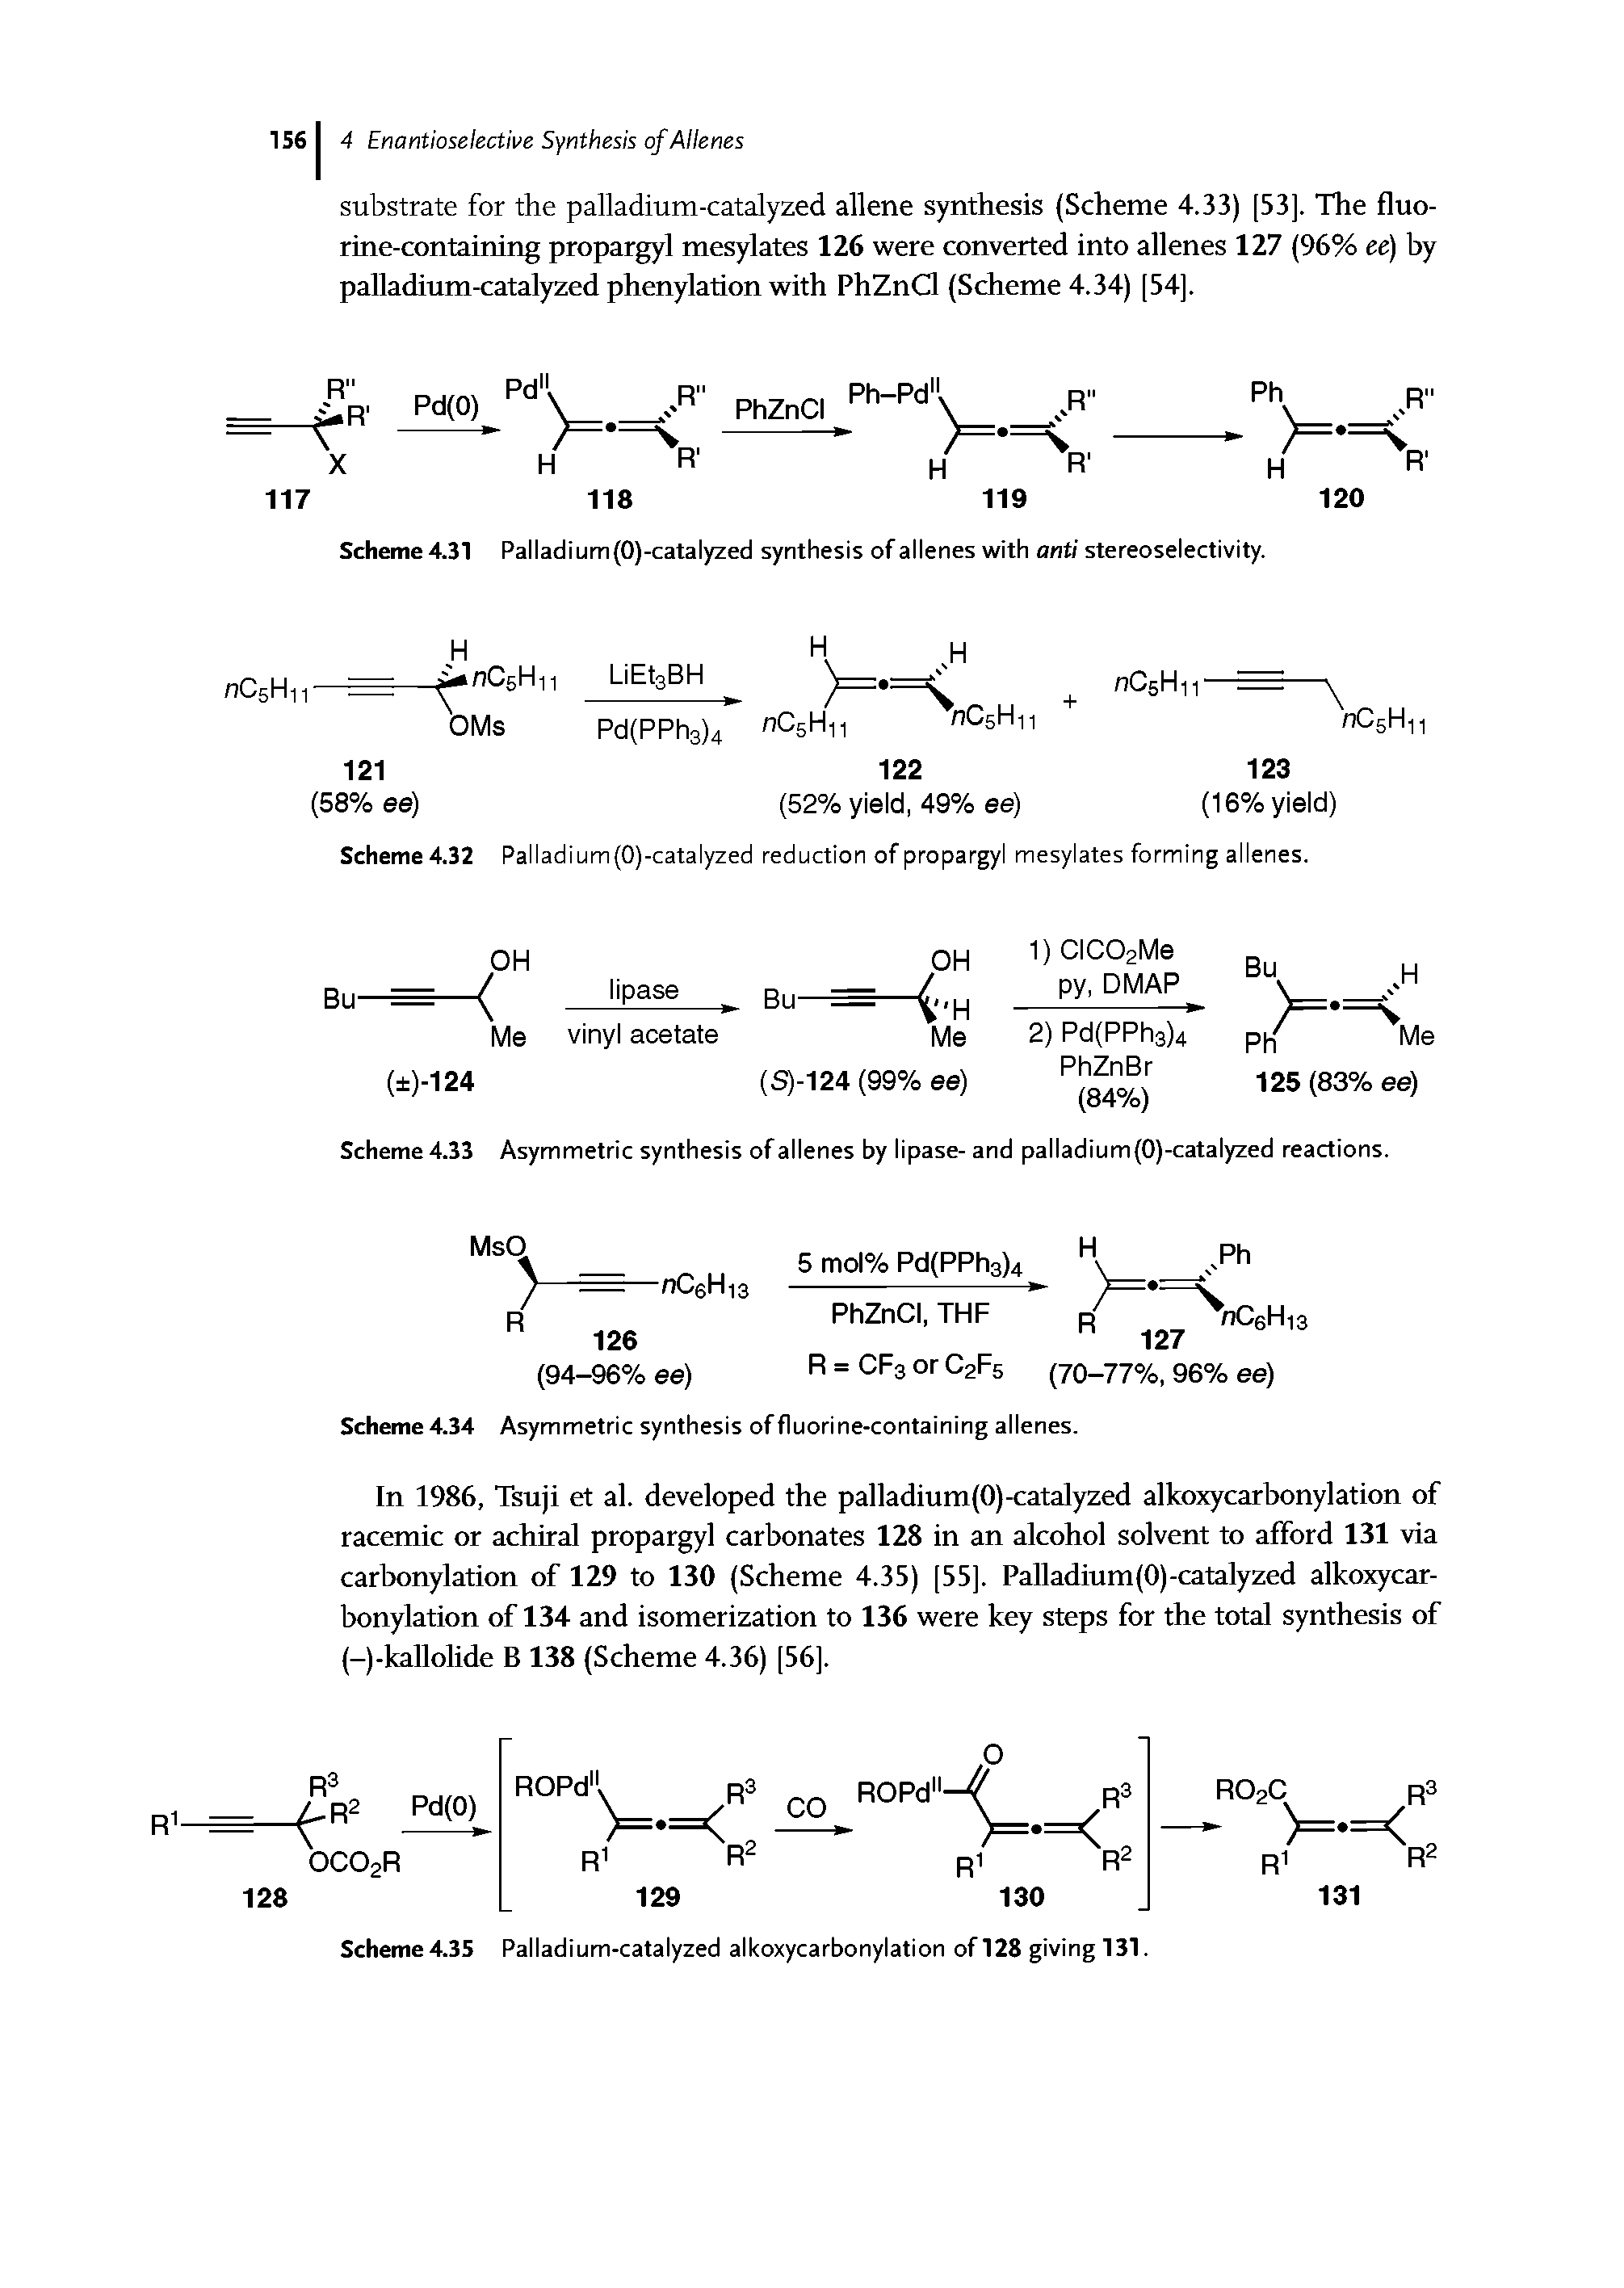 Scheme 4.34 Asymmetric synthesis of fluorine-containing allenes.